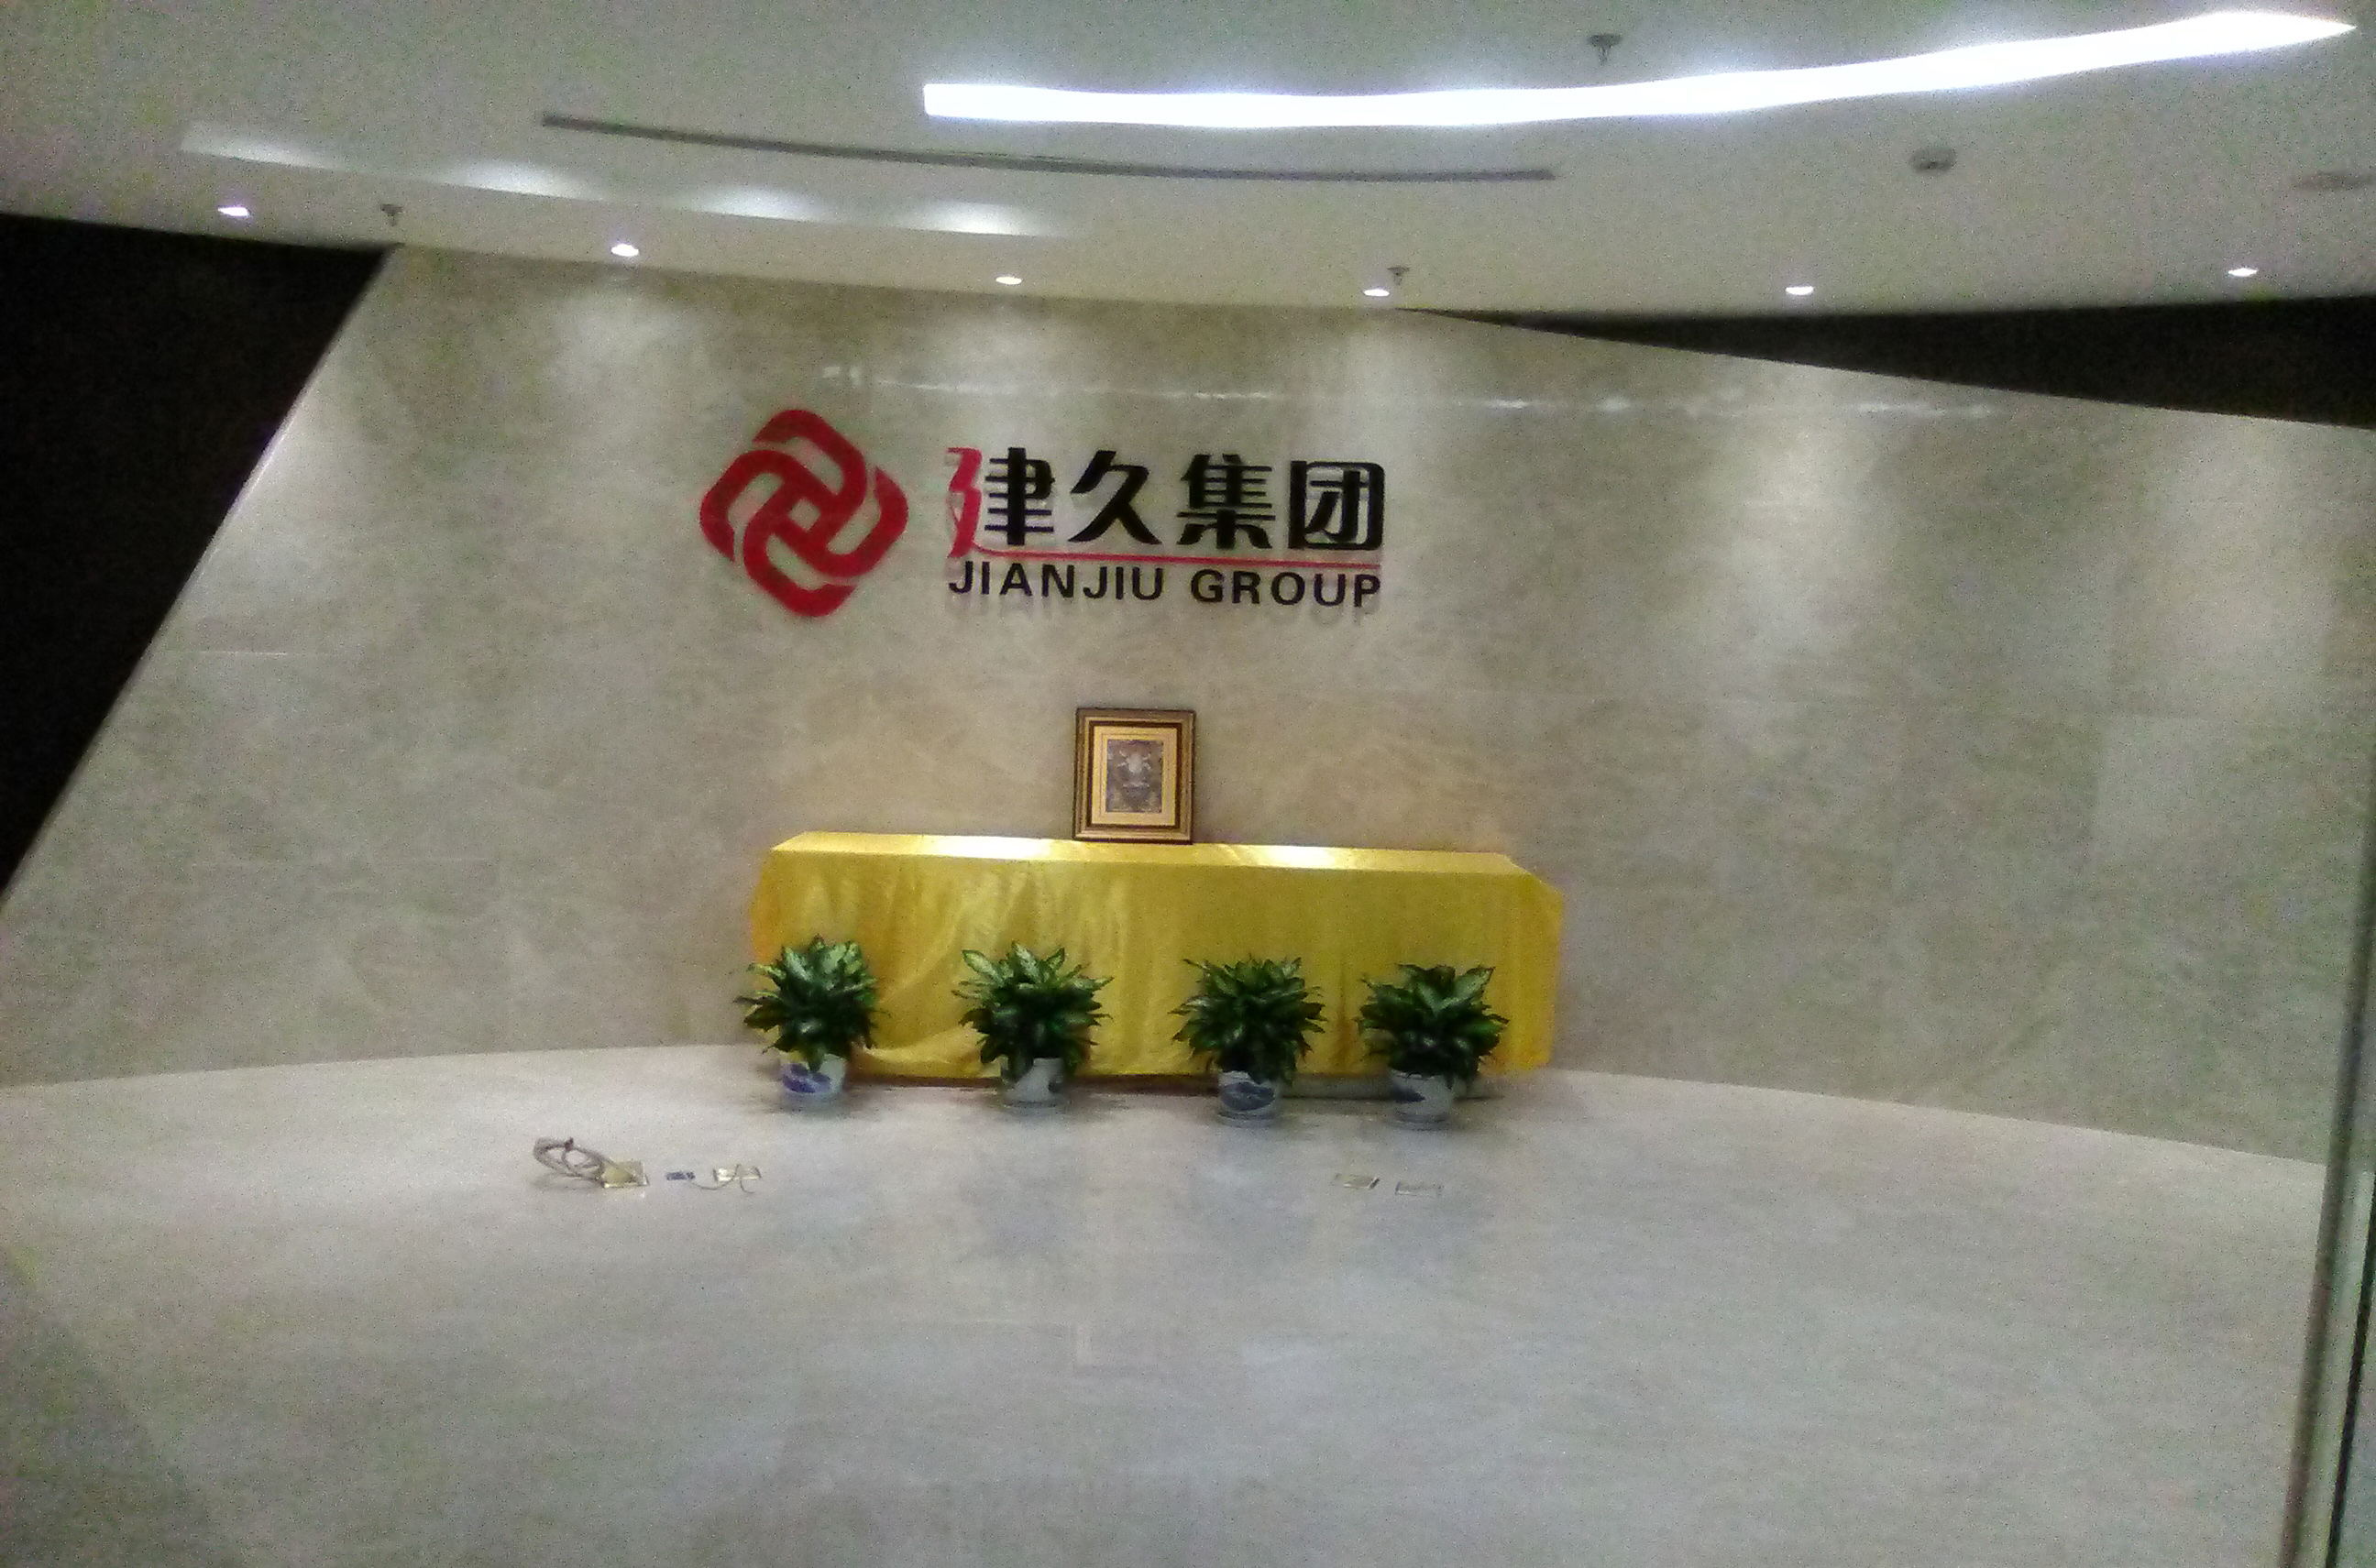 Qituo conference system settled in Beijing jianjiu group